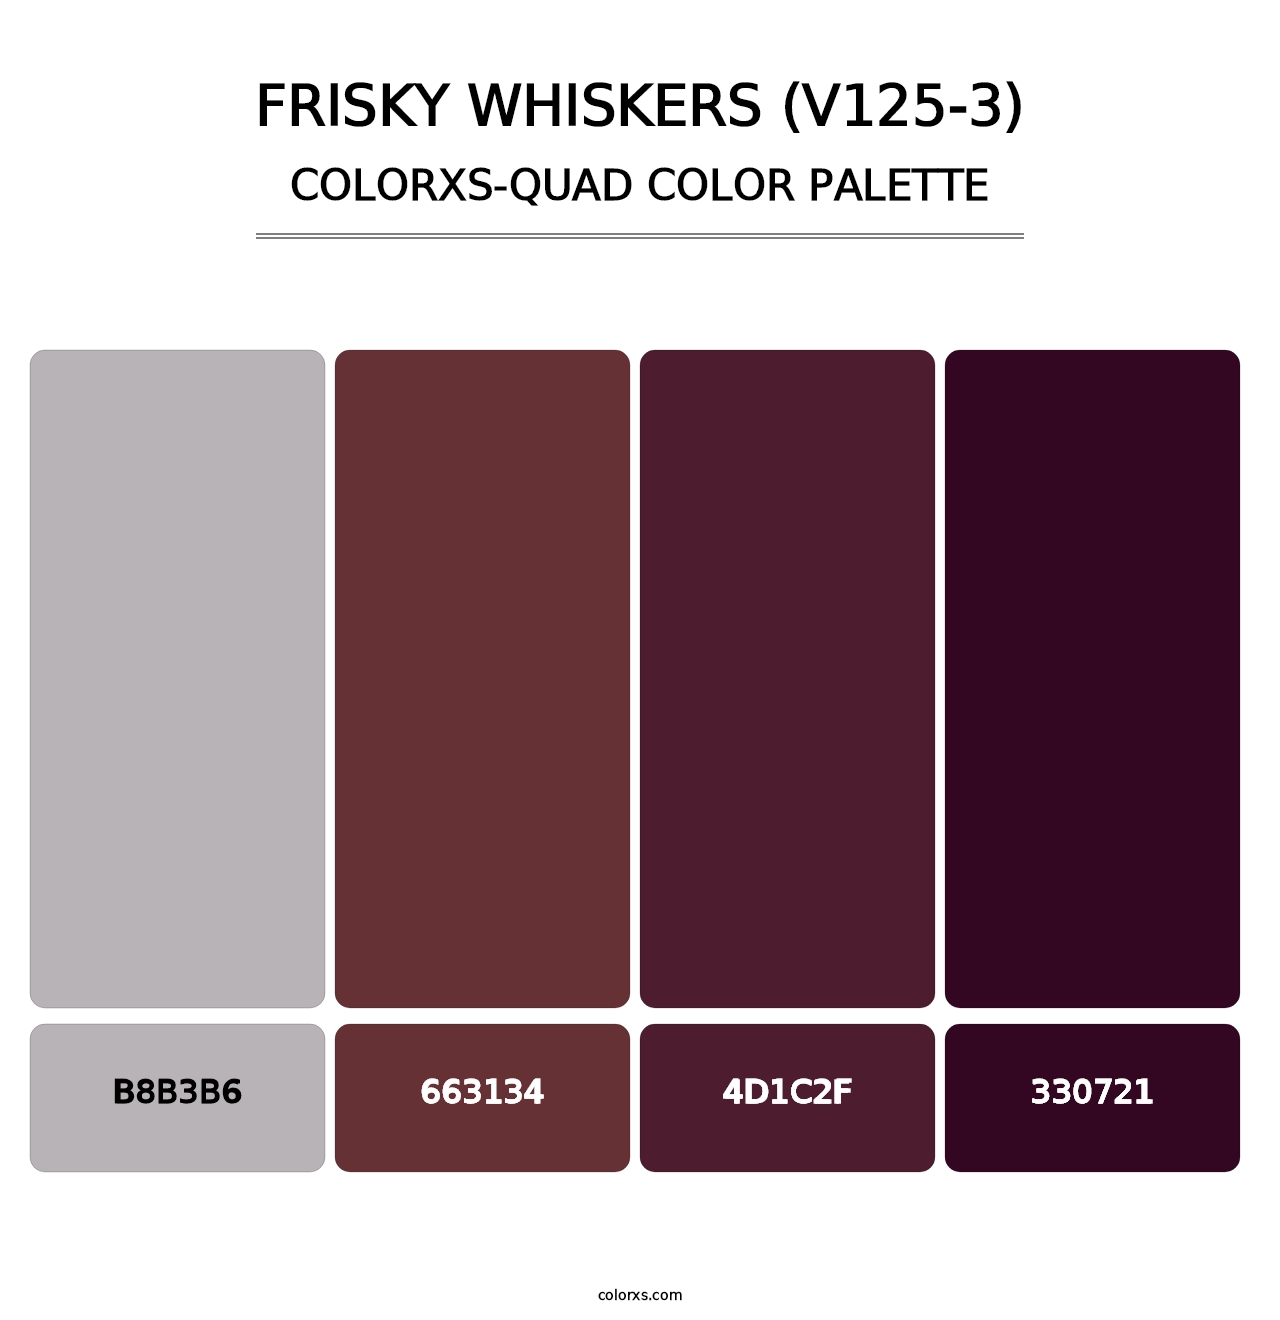 Frisky Whiskers (V125-3) - Colorxs Quad Palette